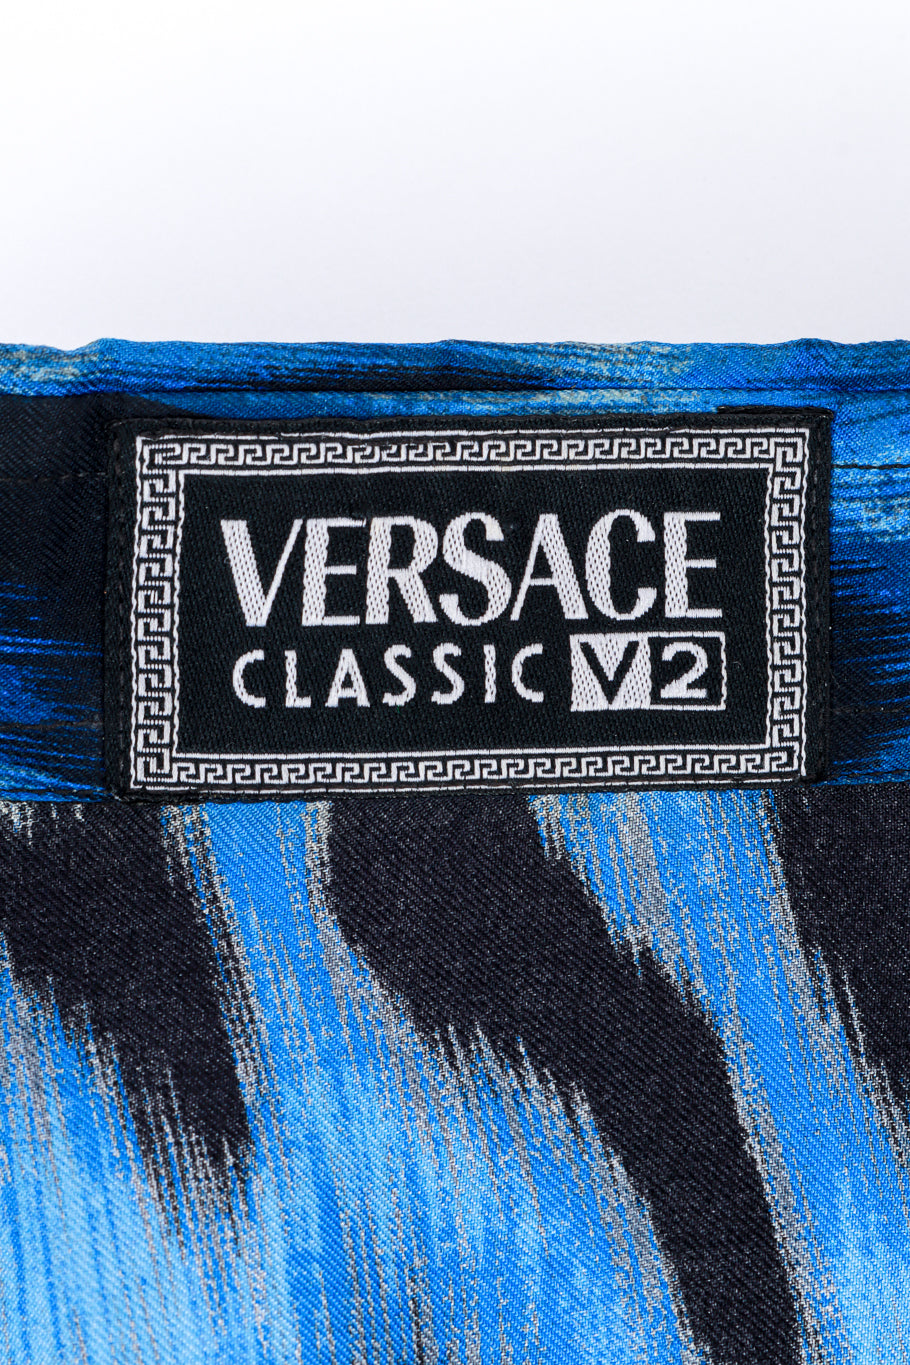 Vintage Versace Classic V2 Animal Print Blouse signature label closeup @recess la